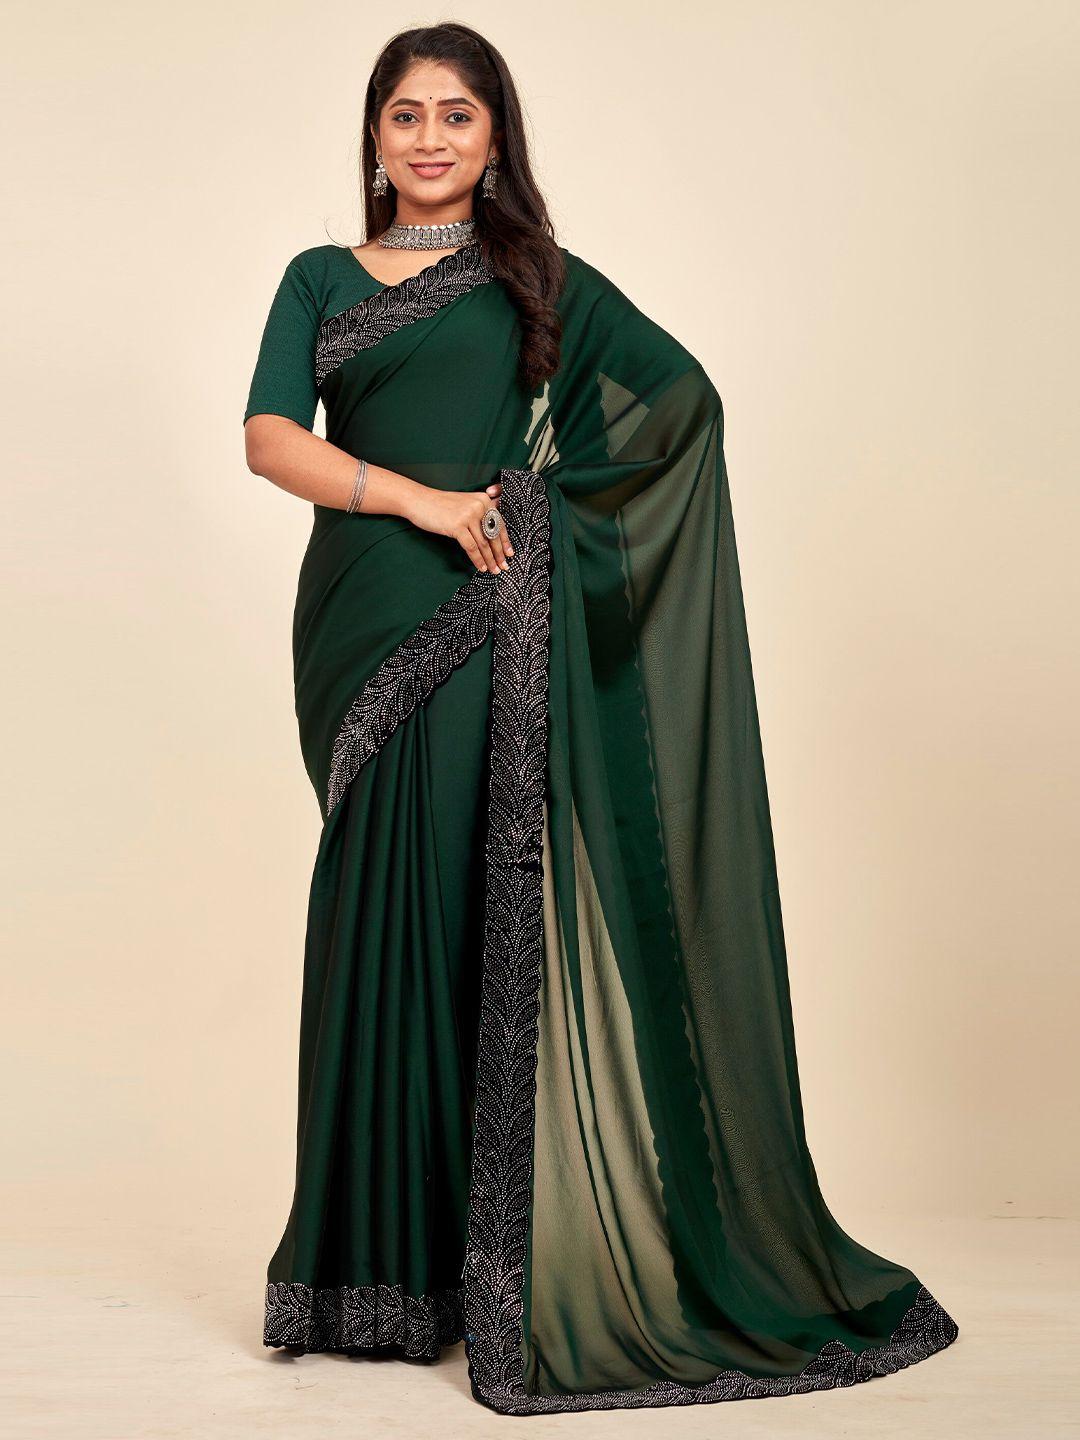 mahalasa olive green embellished embroidered silk blend saree